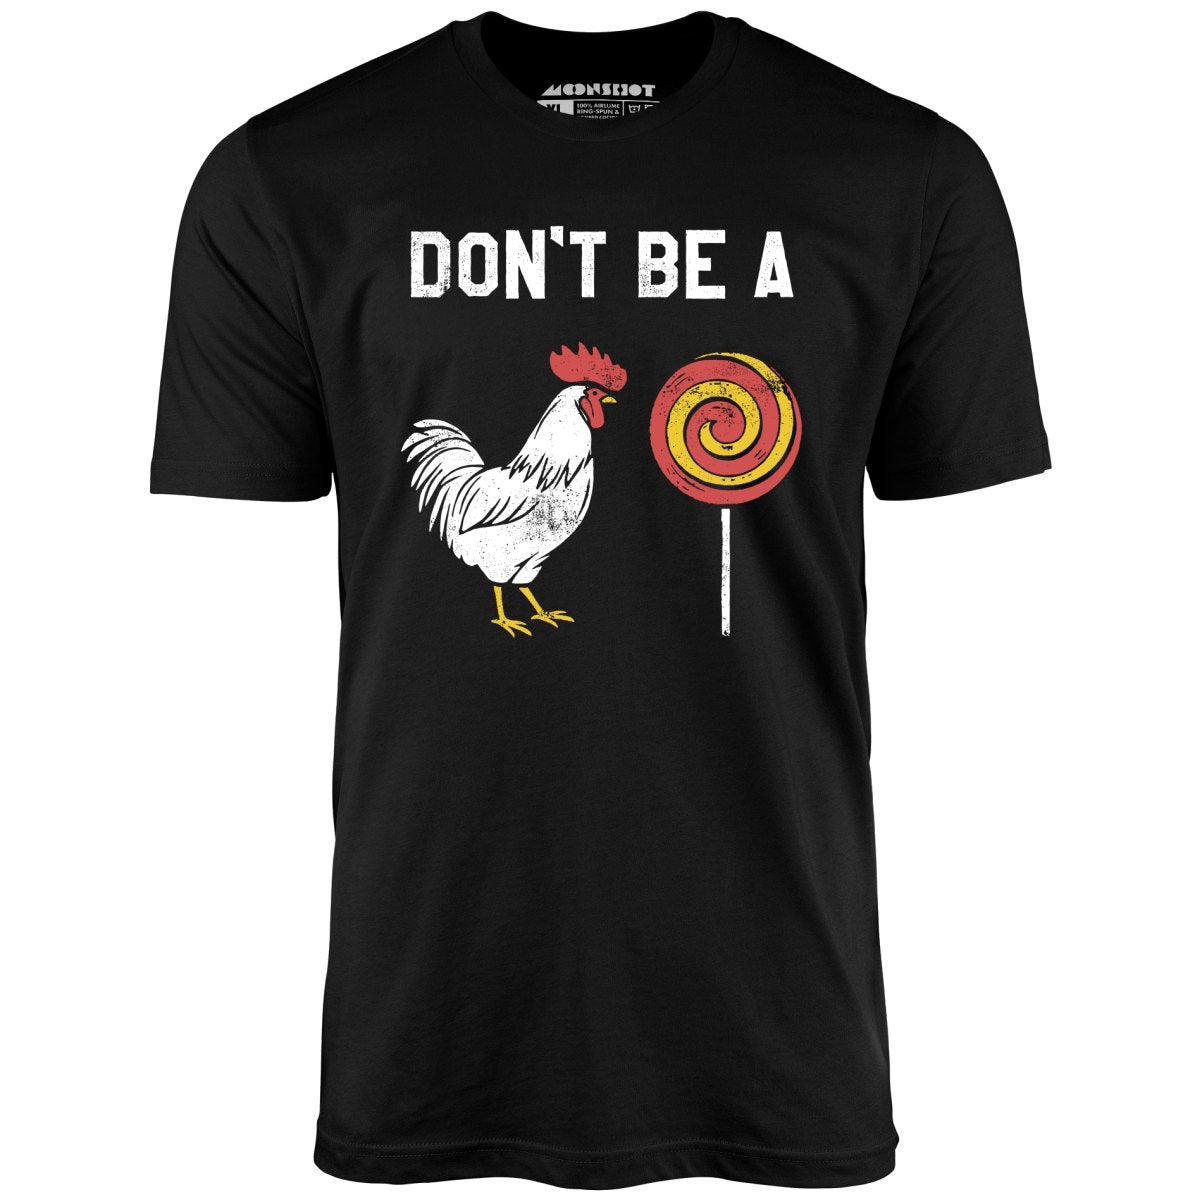 Don't Be a Cocksucker - Unisex T-Shirt